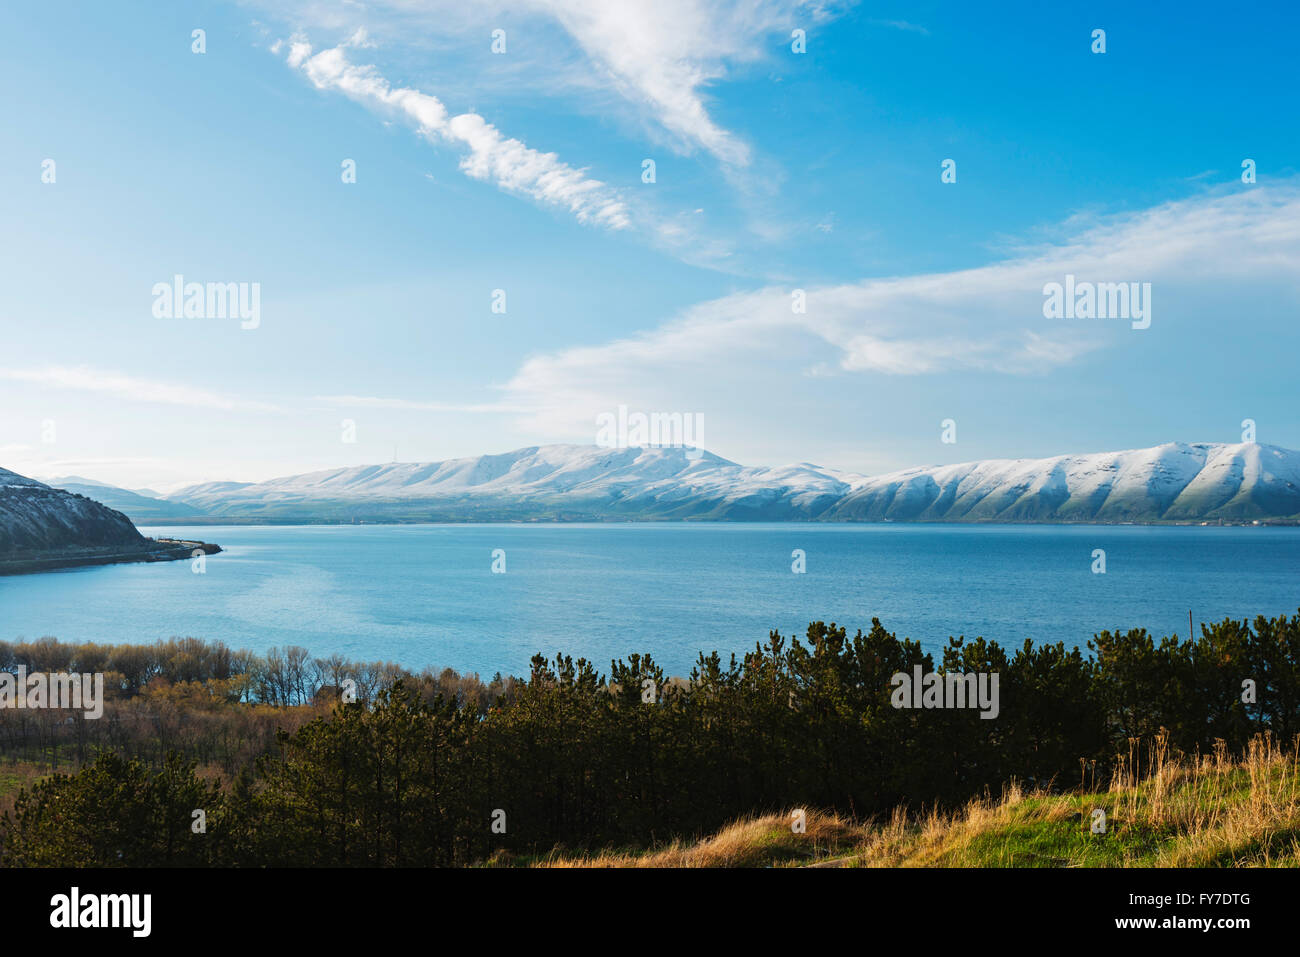 Eurasia, Caucasus region, Armenia, Gegharkunik province, Lake Sevan Stock Photo